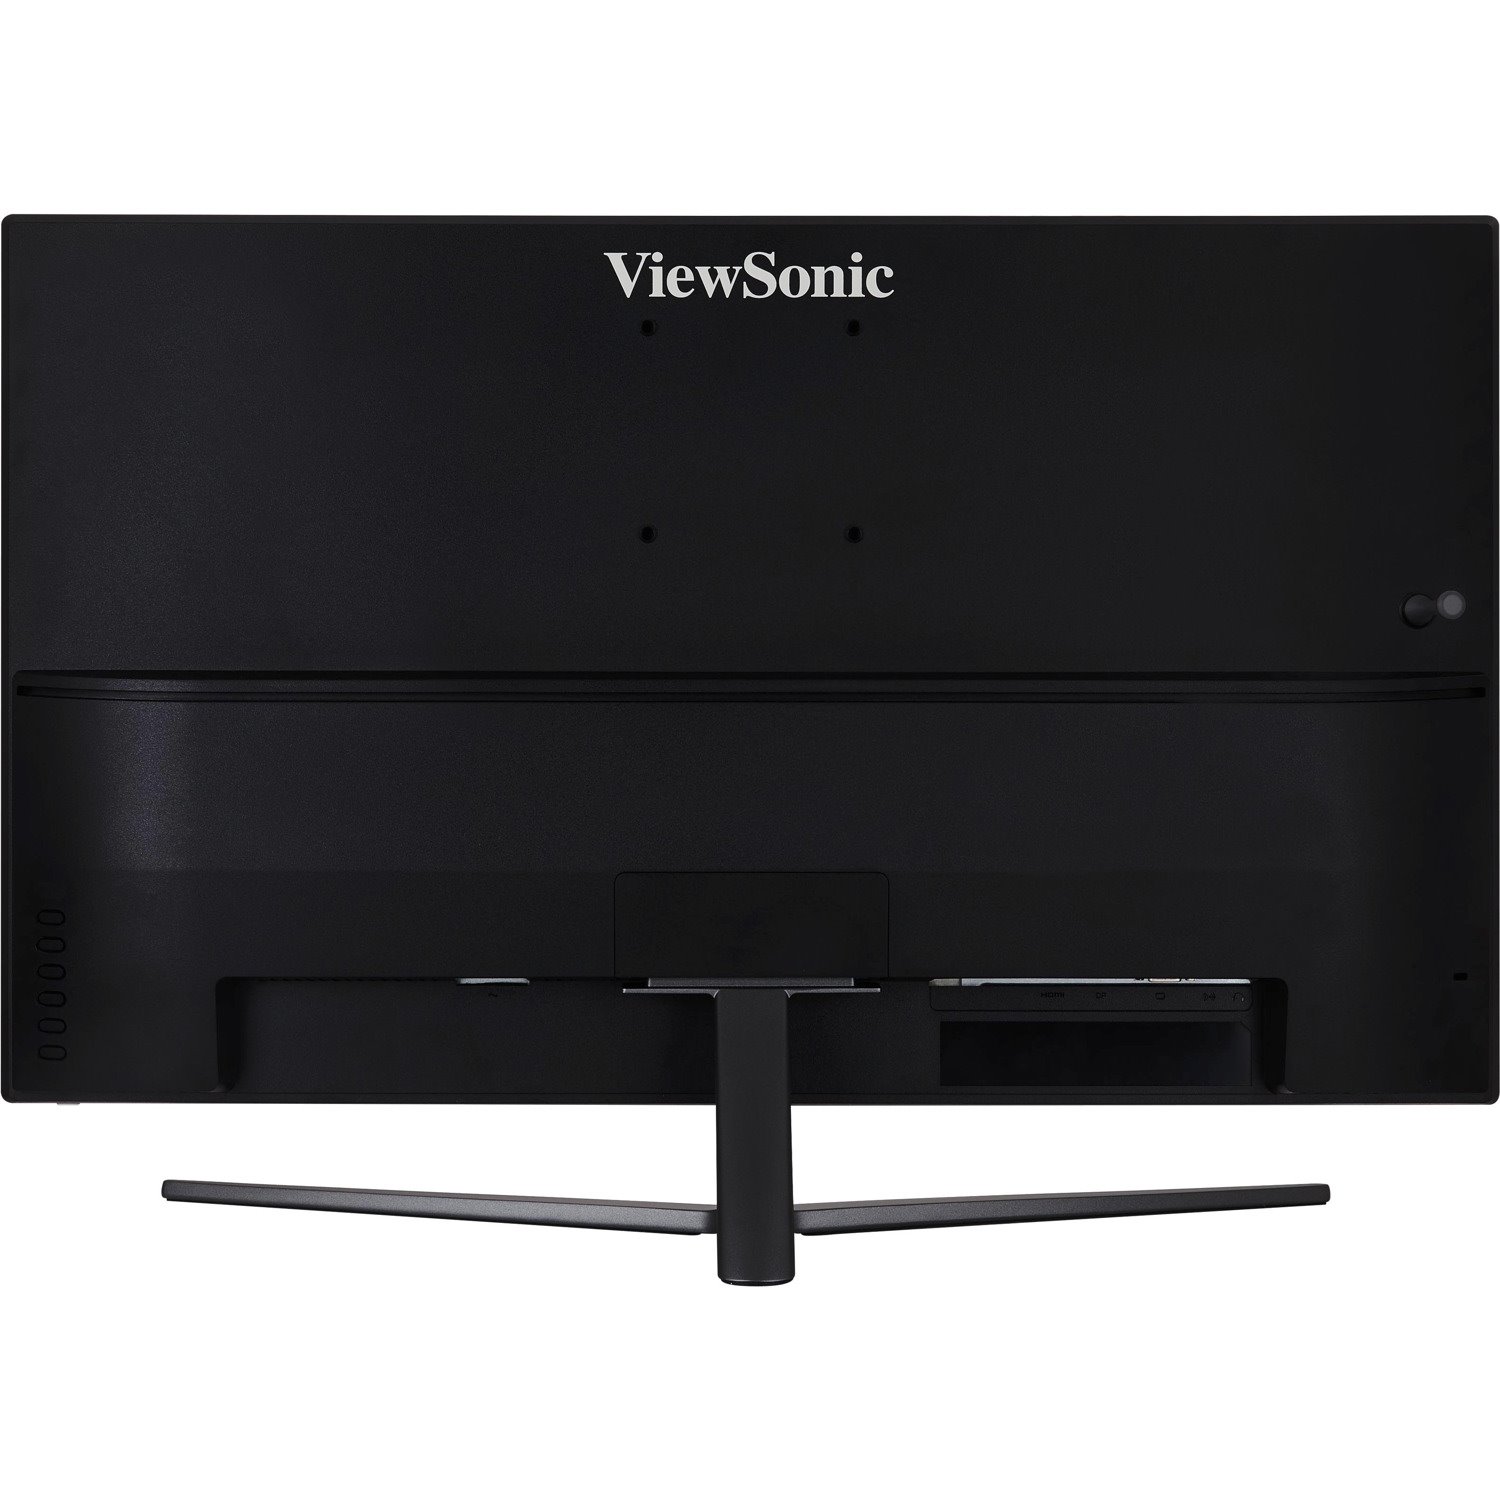 ViewSonic VX3211-2K-MHD 32" 1440p IPS Monitor with HDMI, DisplayPort, VGA and sRGB